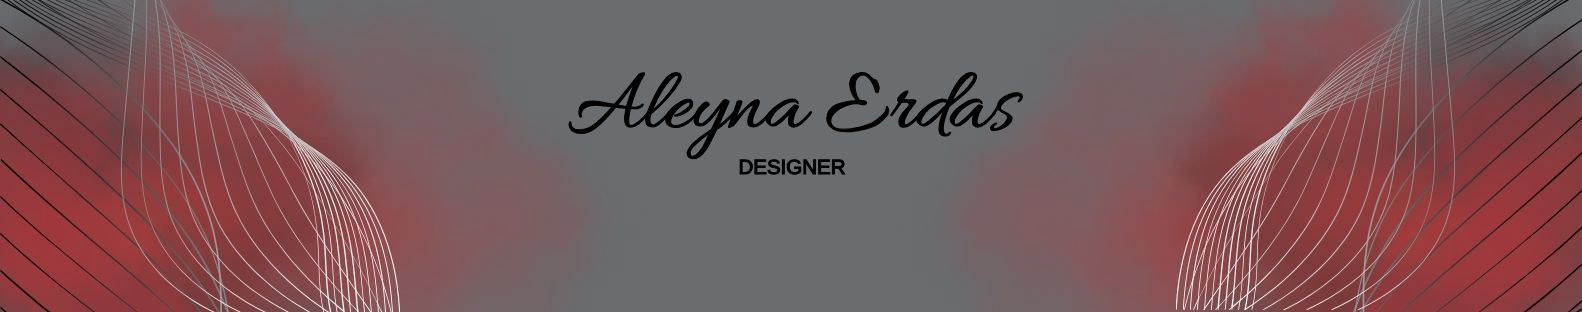 aysendra ‎'s profile banner